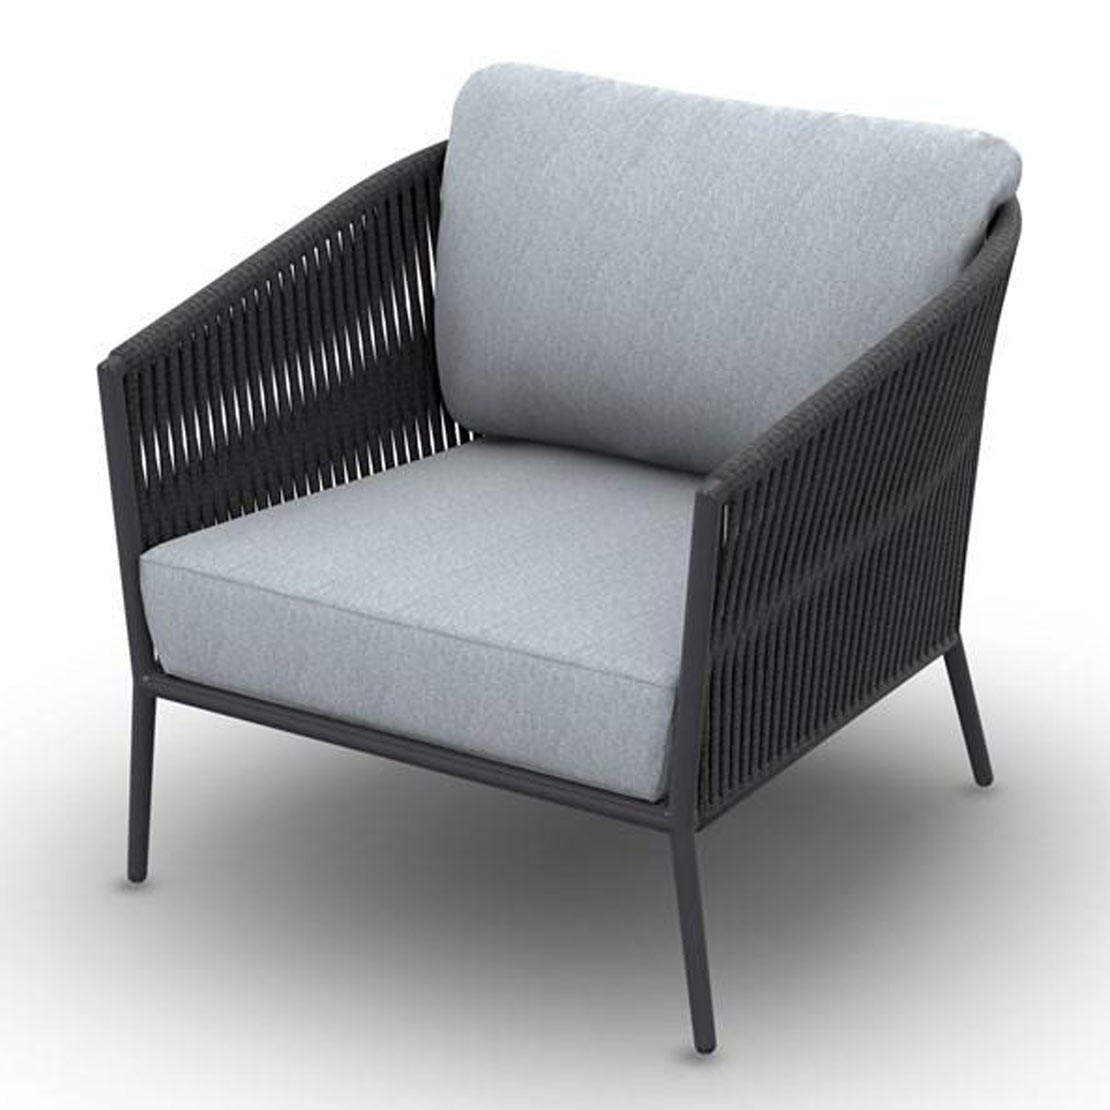 Fortuna Rope Sofa 1-Seat Lounge Chair Alu Charcoal Mat